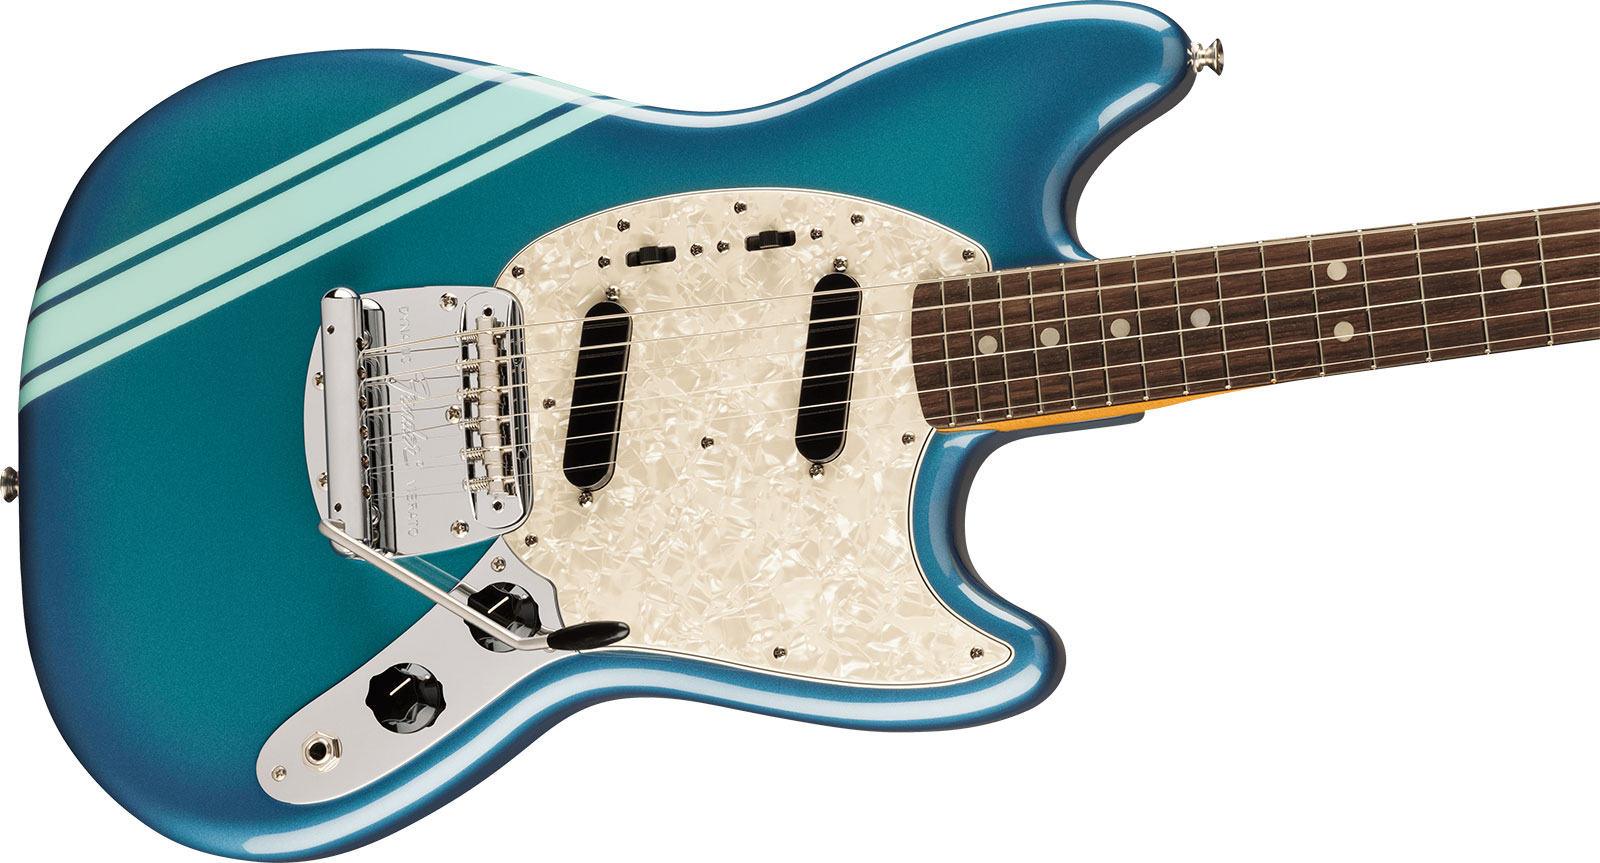 Fender Mustang 70s Competition Vintera 2 Mex 2s Trem Rw - Competition Blue - Retro-rock elektrische gitaar - Variation 2